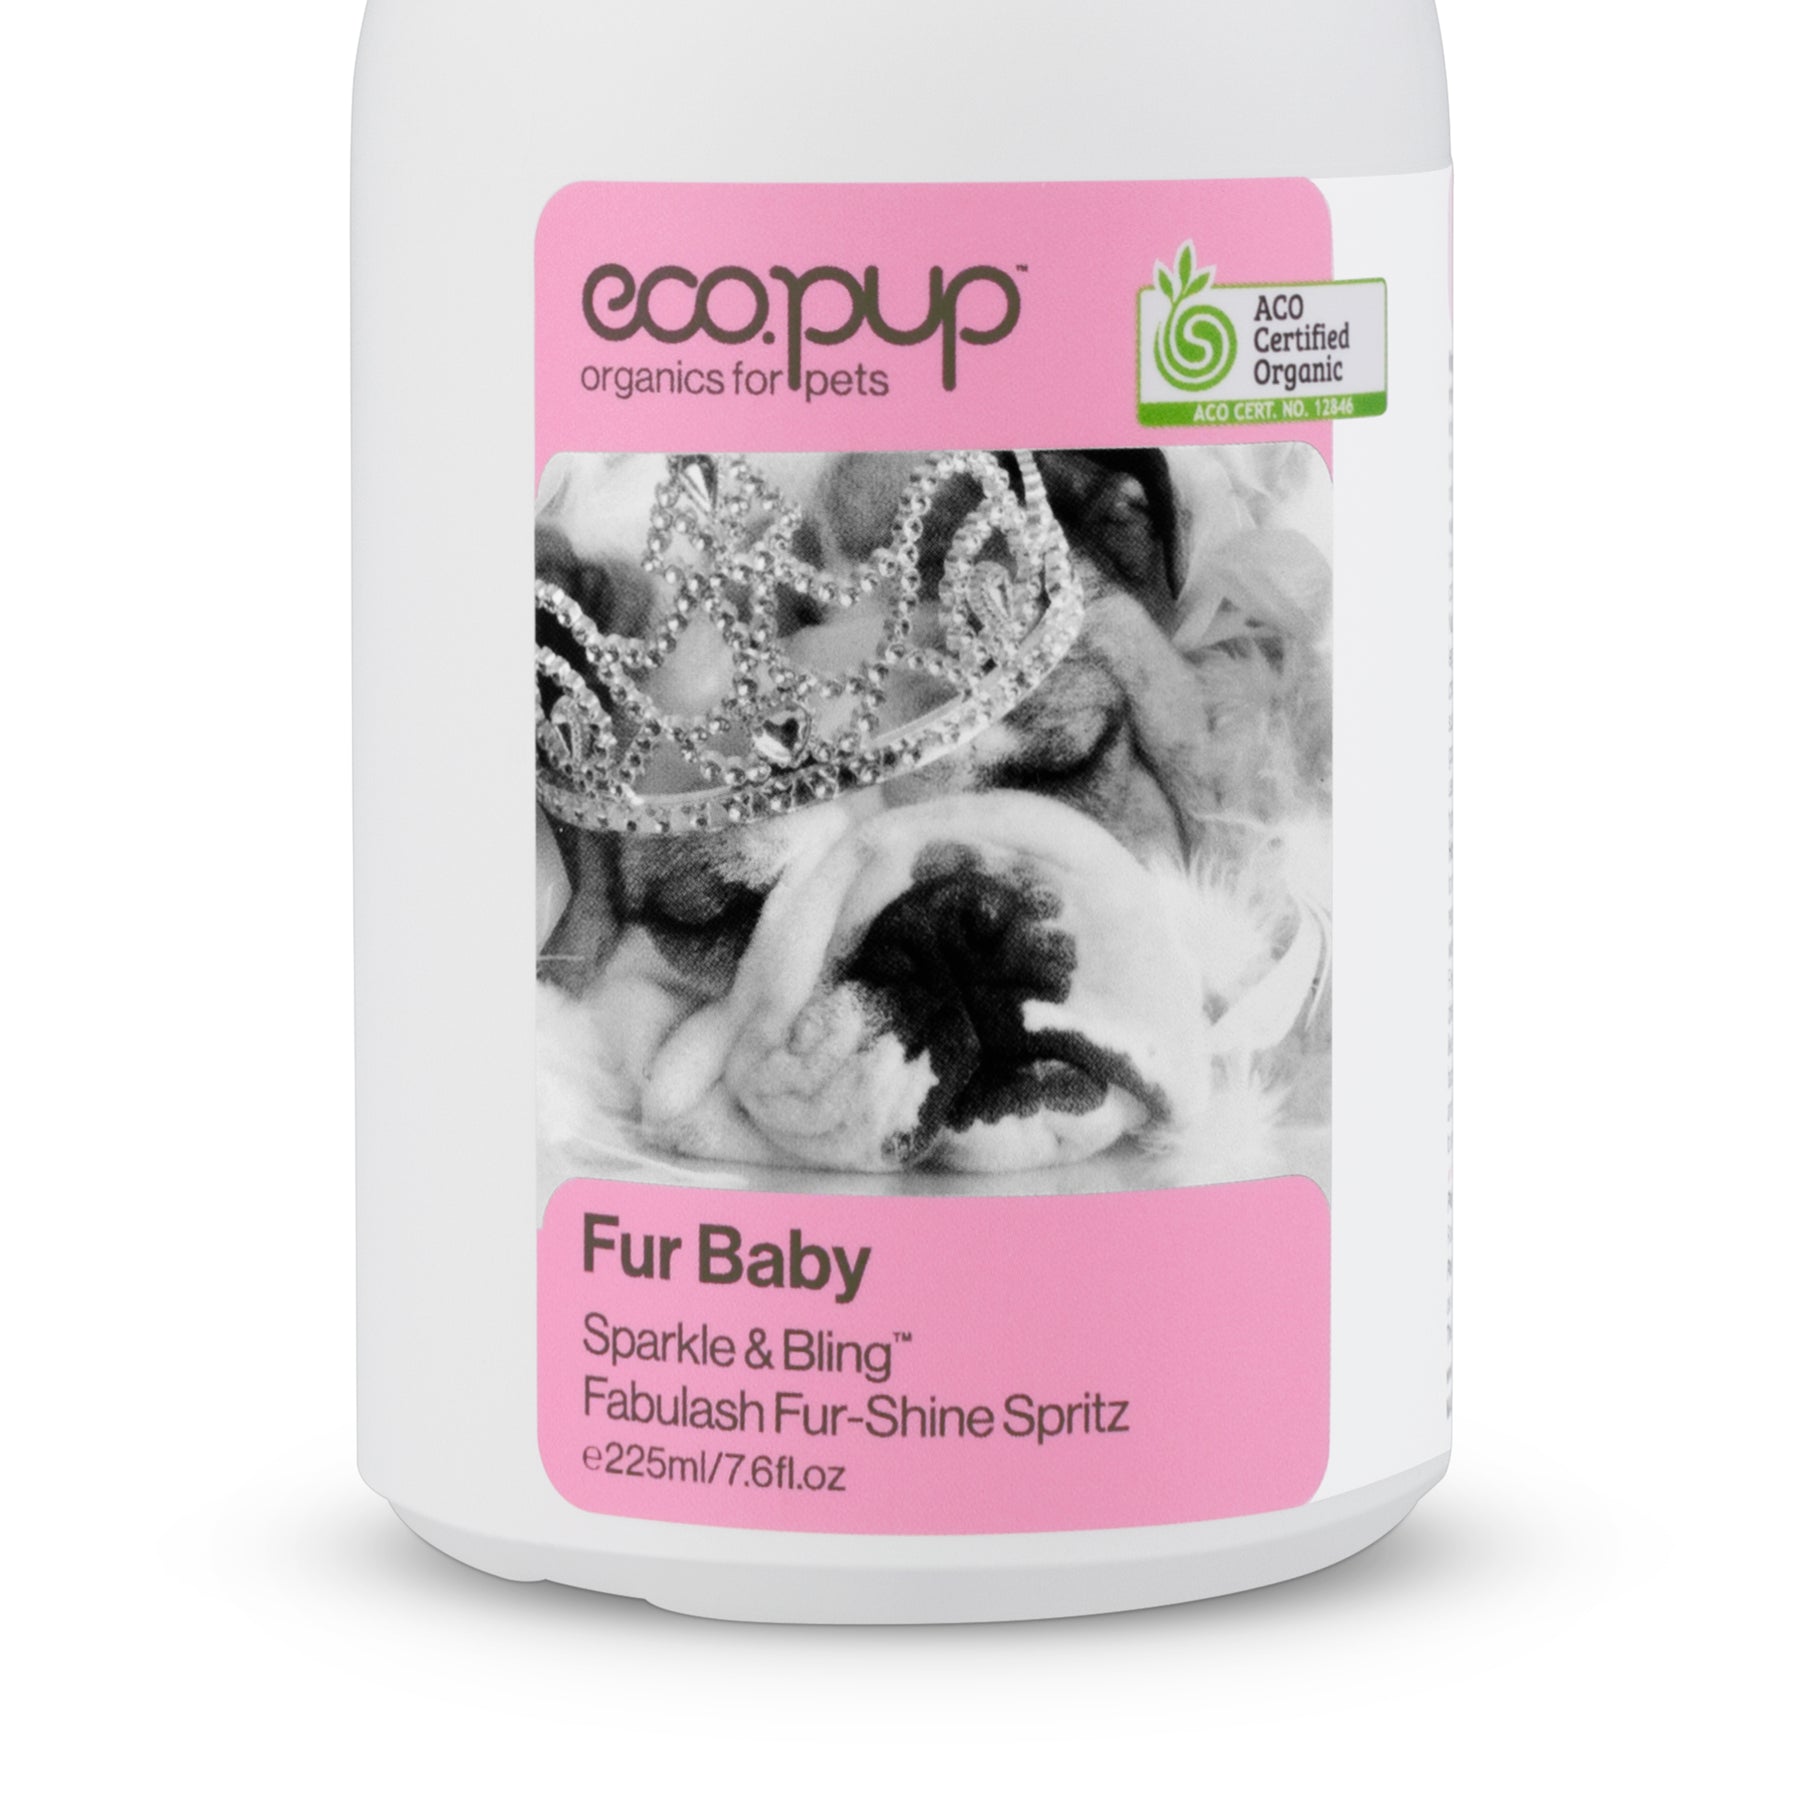 eco.pup Fur Baby Sparkle & Bling Fabulash Fur-shine Spritz